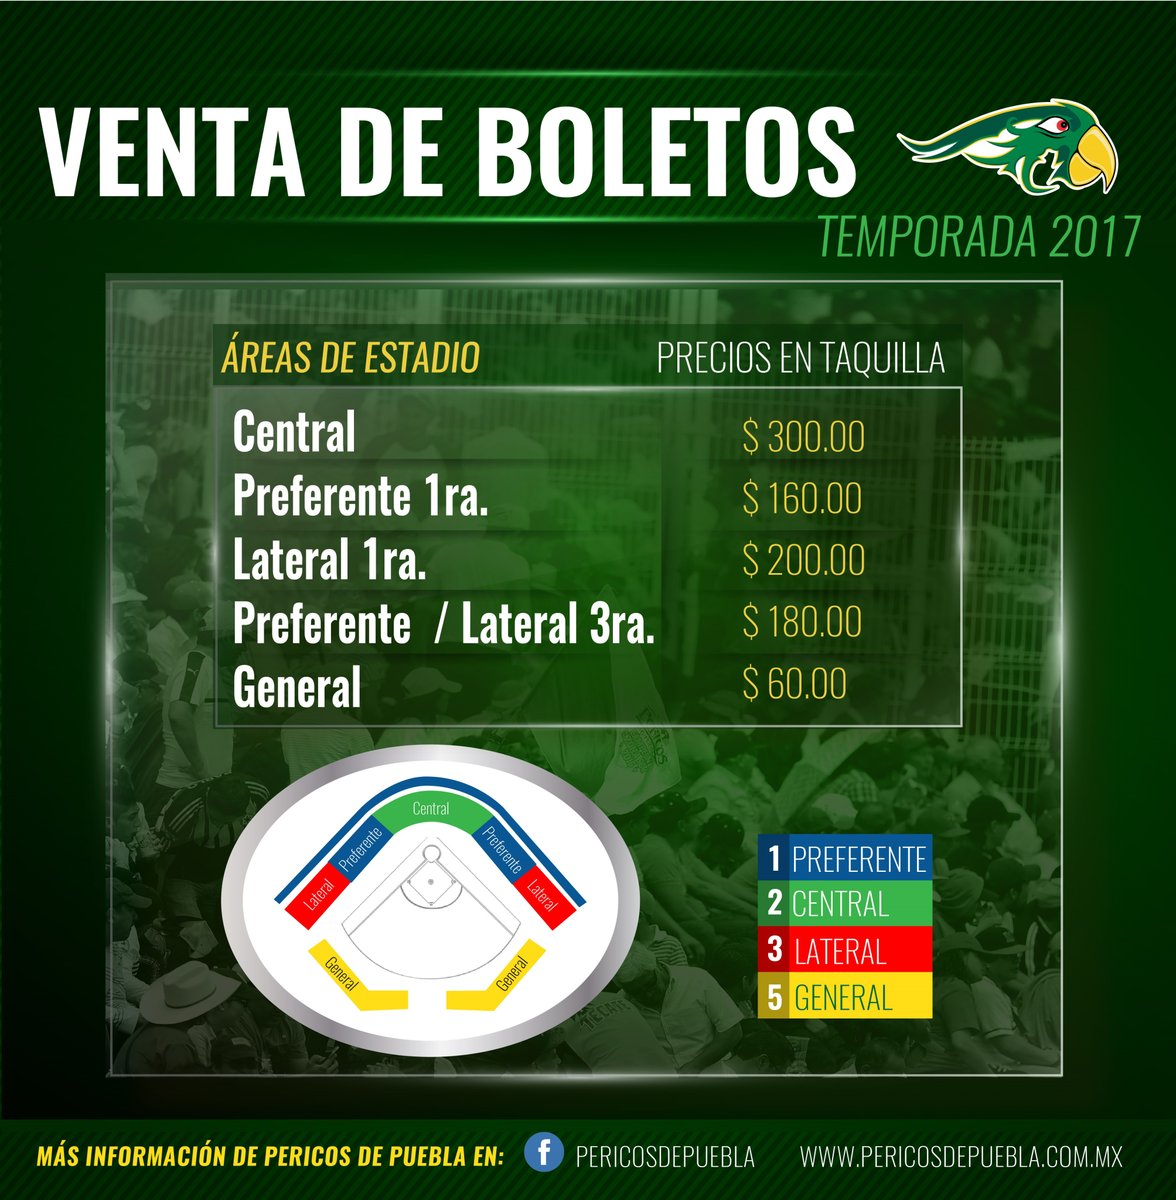 Pericos de Puebla dispara precios de boletos para temporada 2017